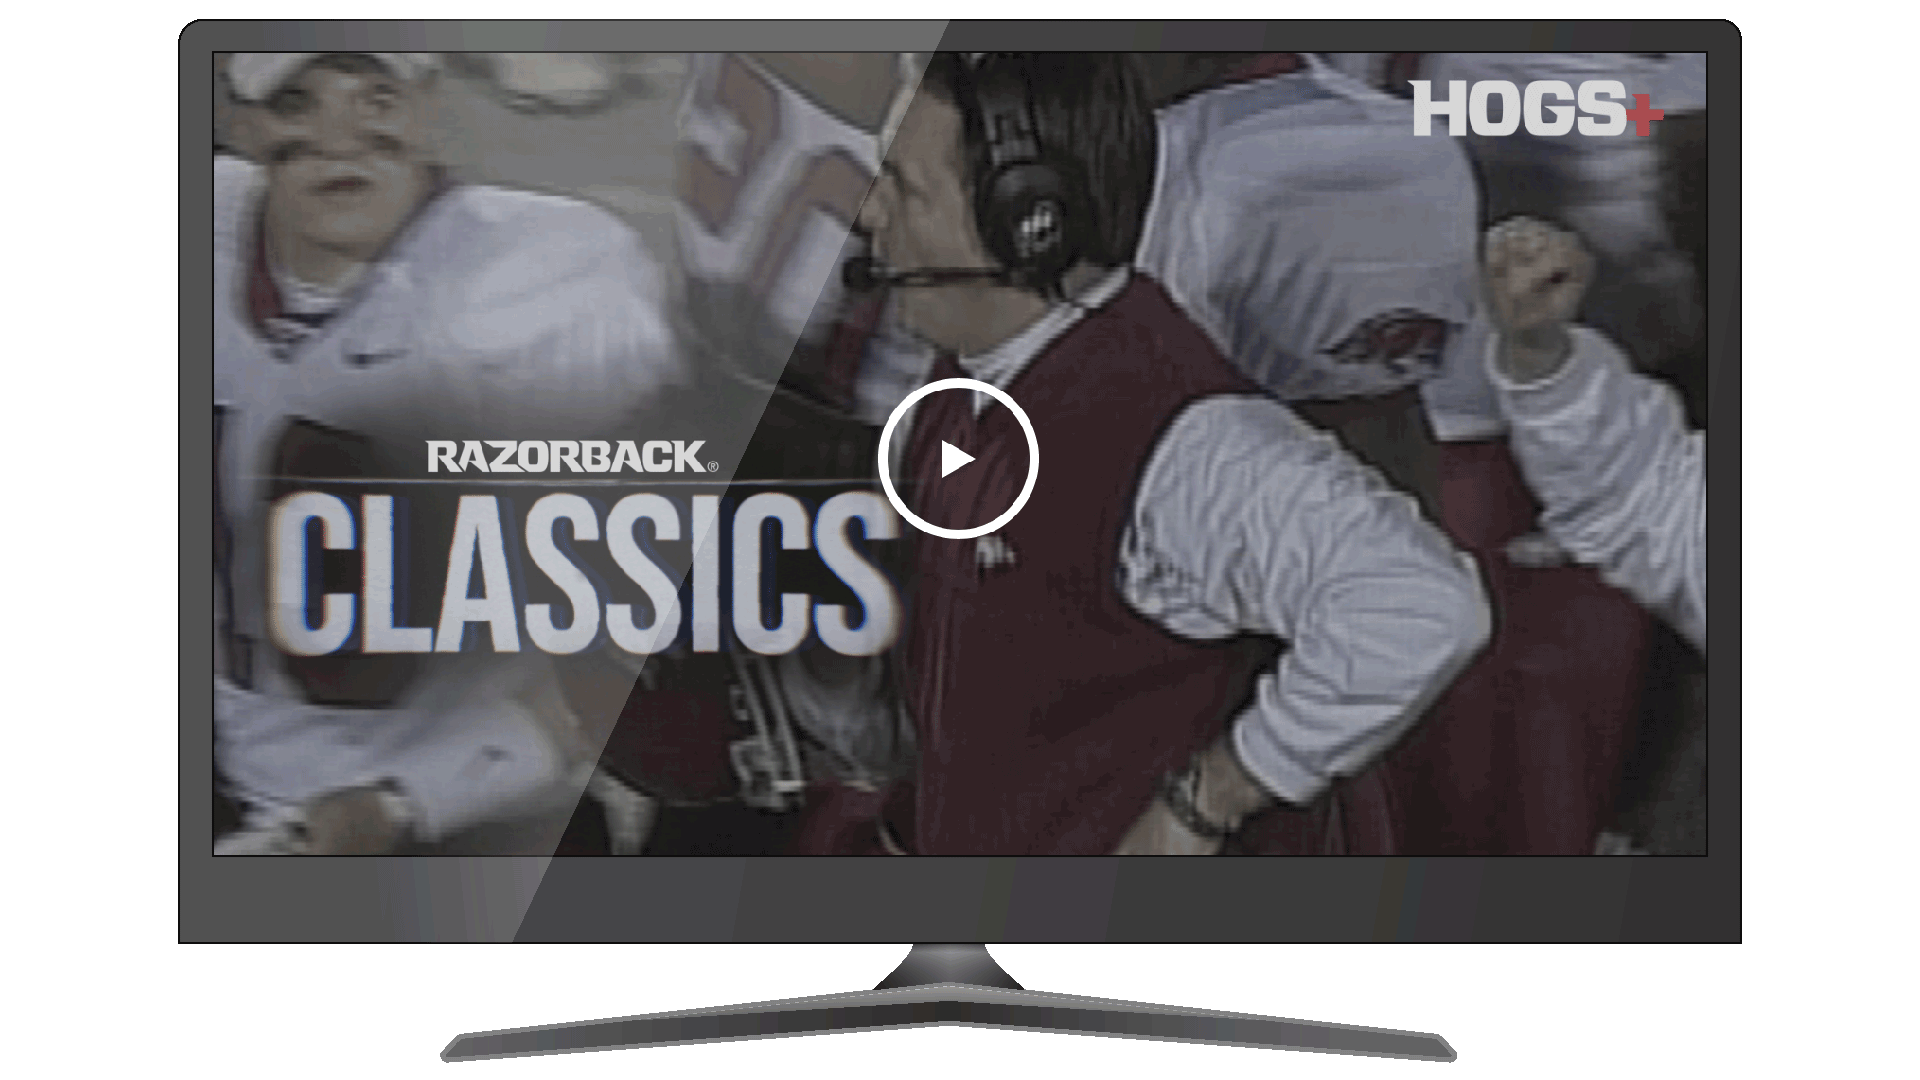 SportStoryCom_HogsPlus-RazorbackClassics.png